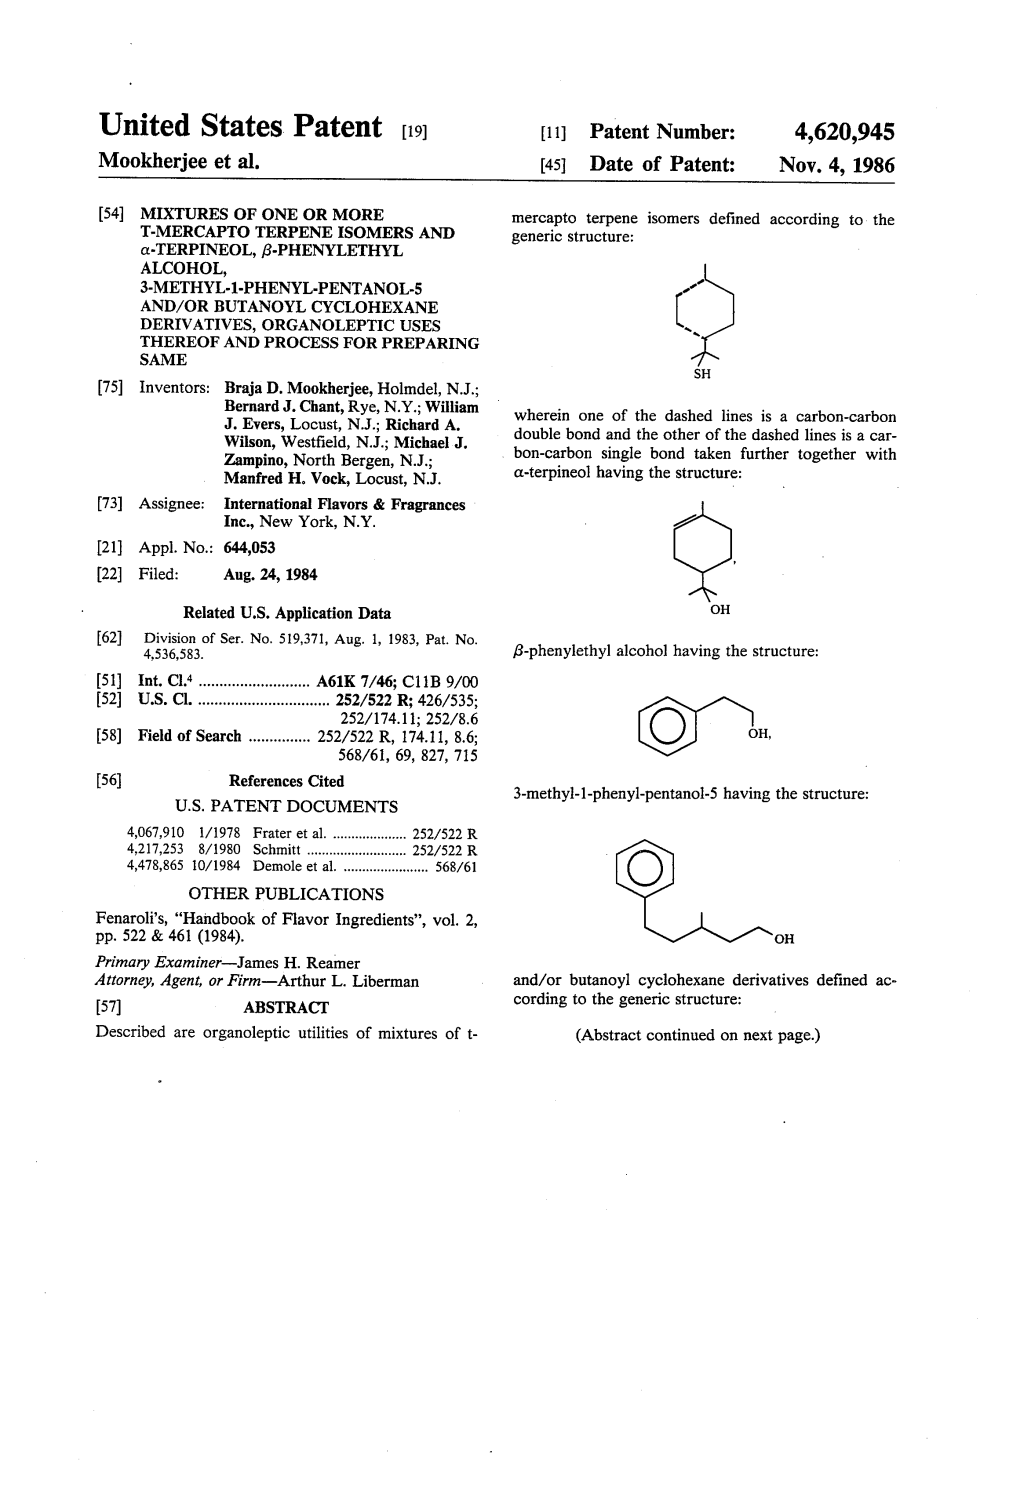 United States Patent (19) 11 Patent Number: 4,620,945 Mookherjee Et Al